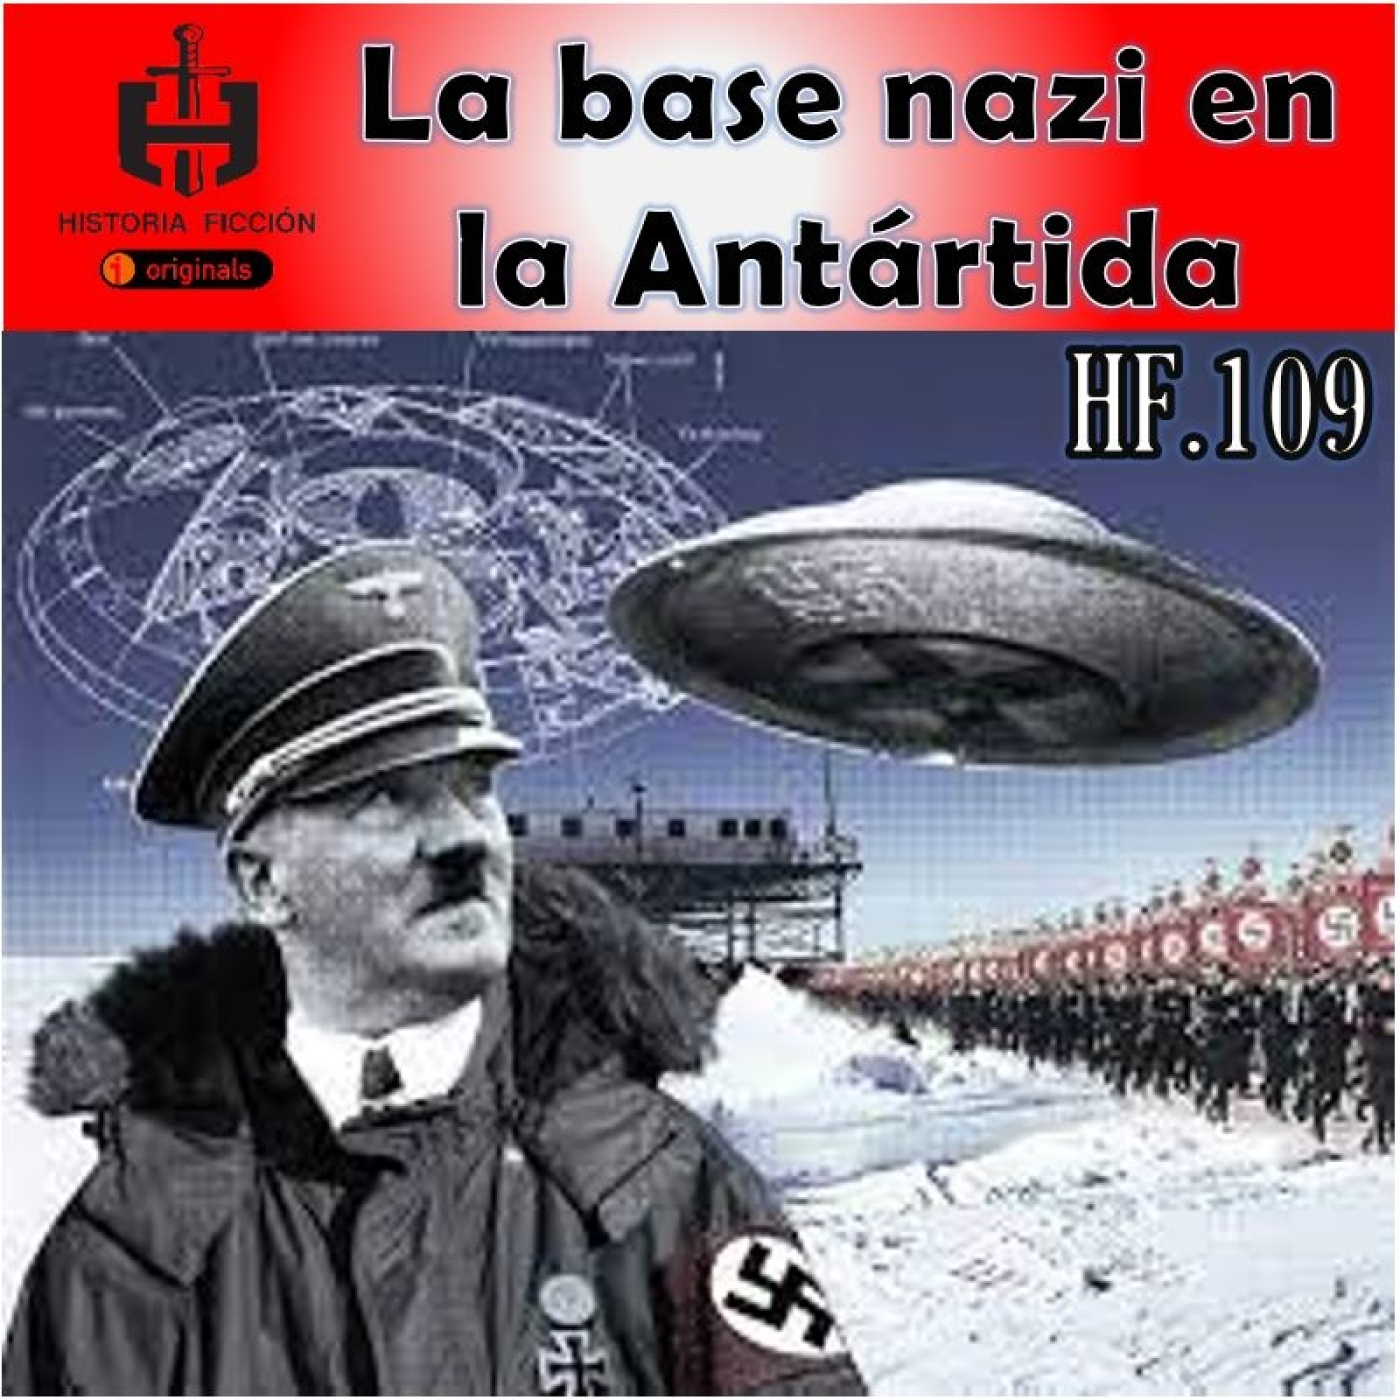 HF.109 - Bases nazis en la Antartida